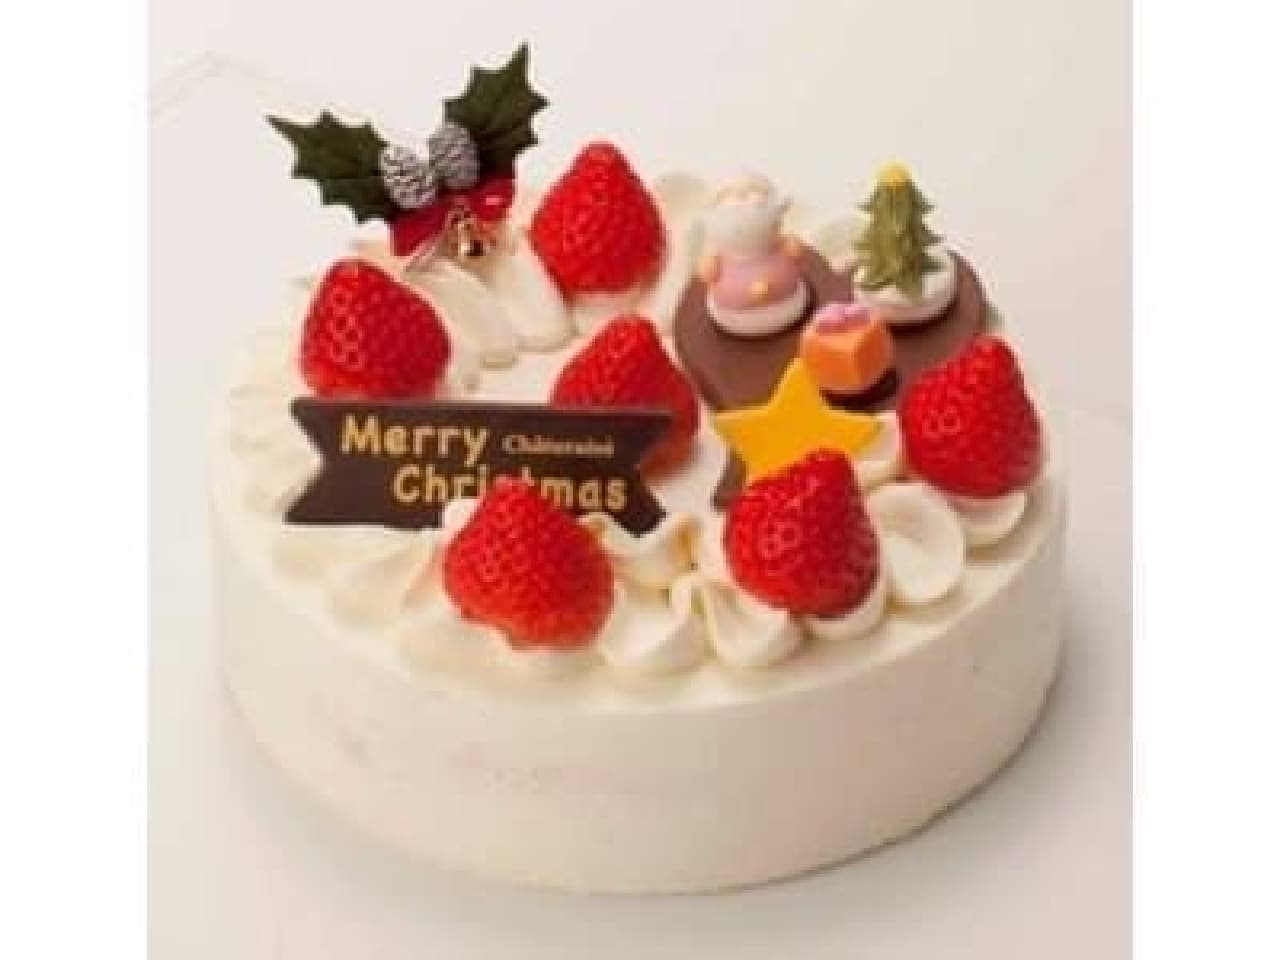 "Xmas fresh cream decoration" with cute Santa